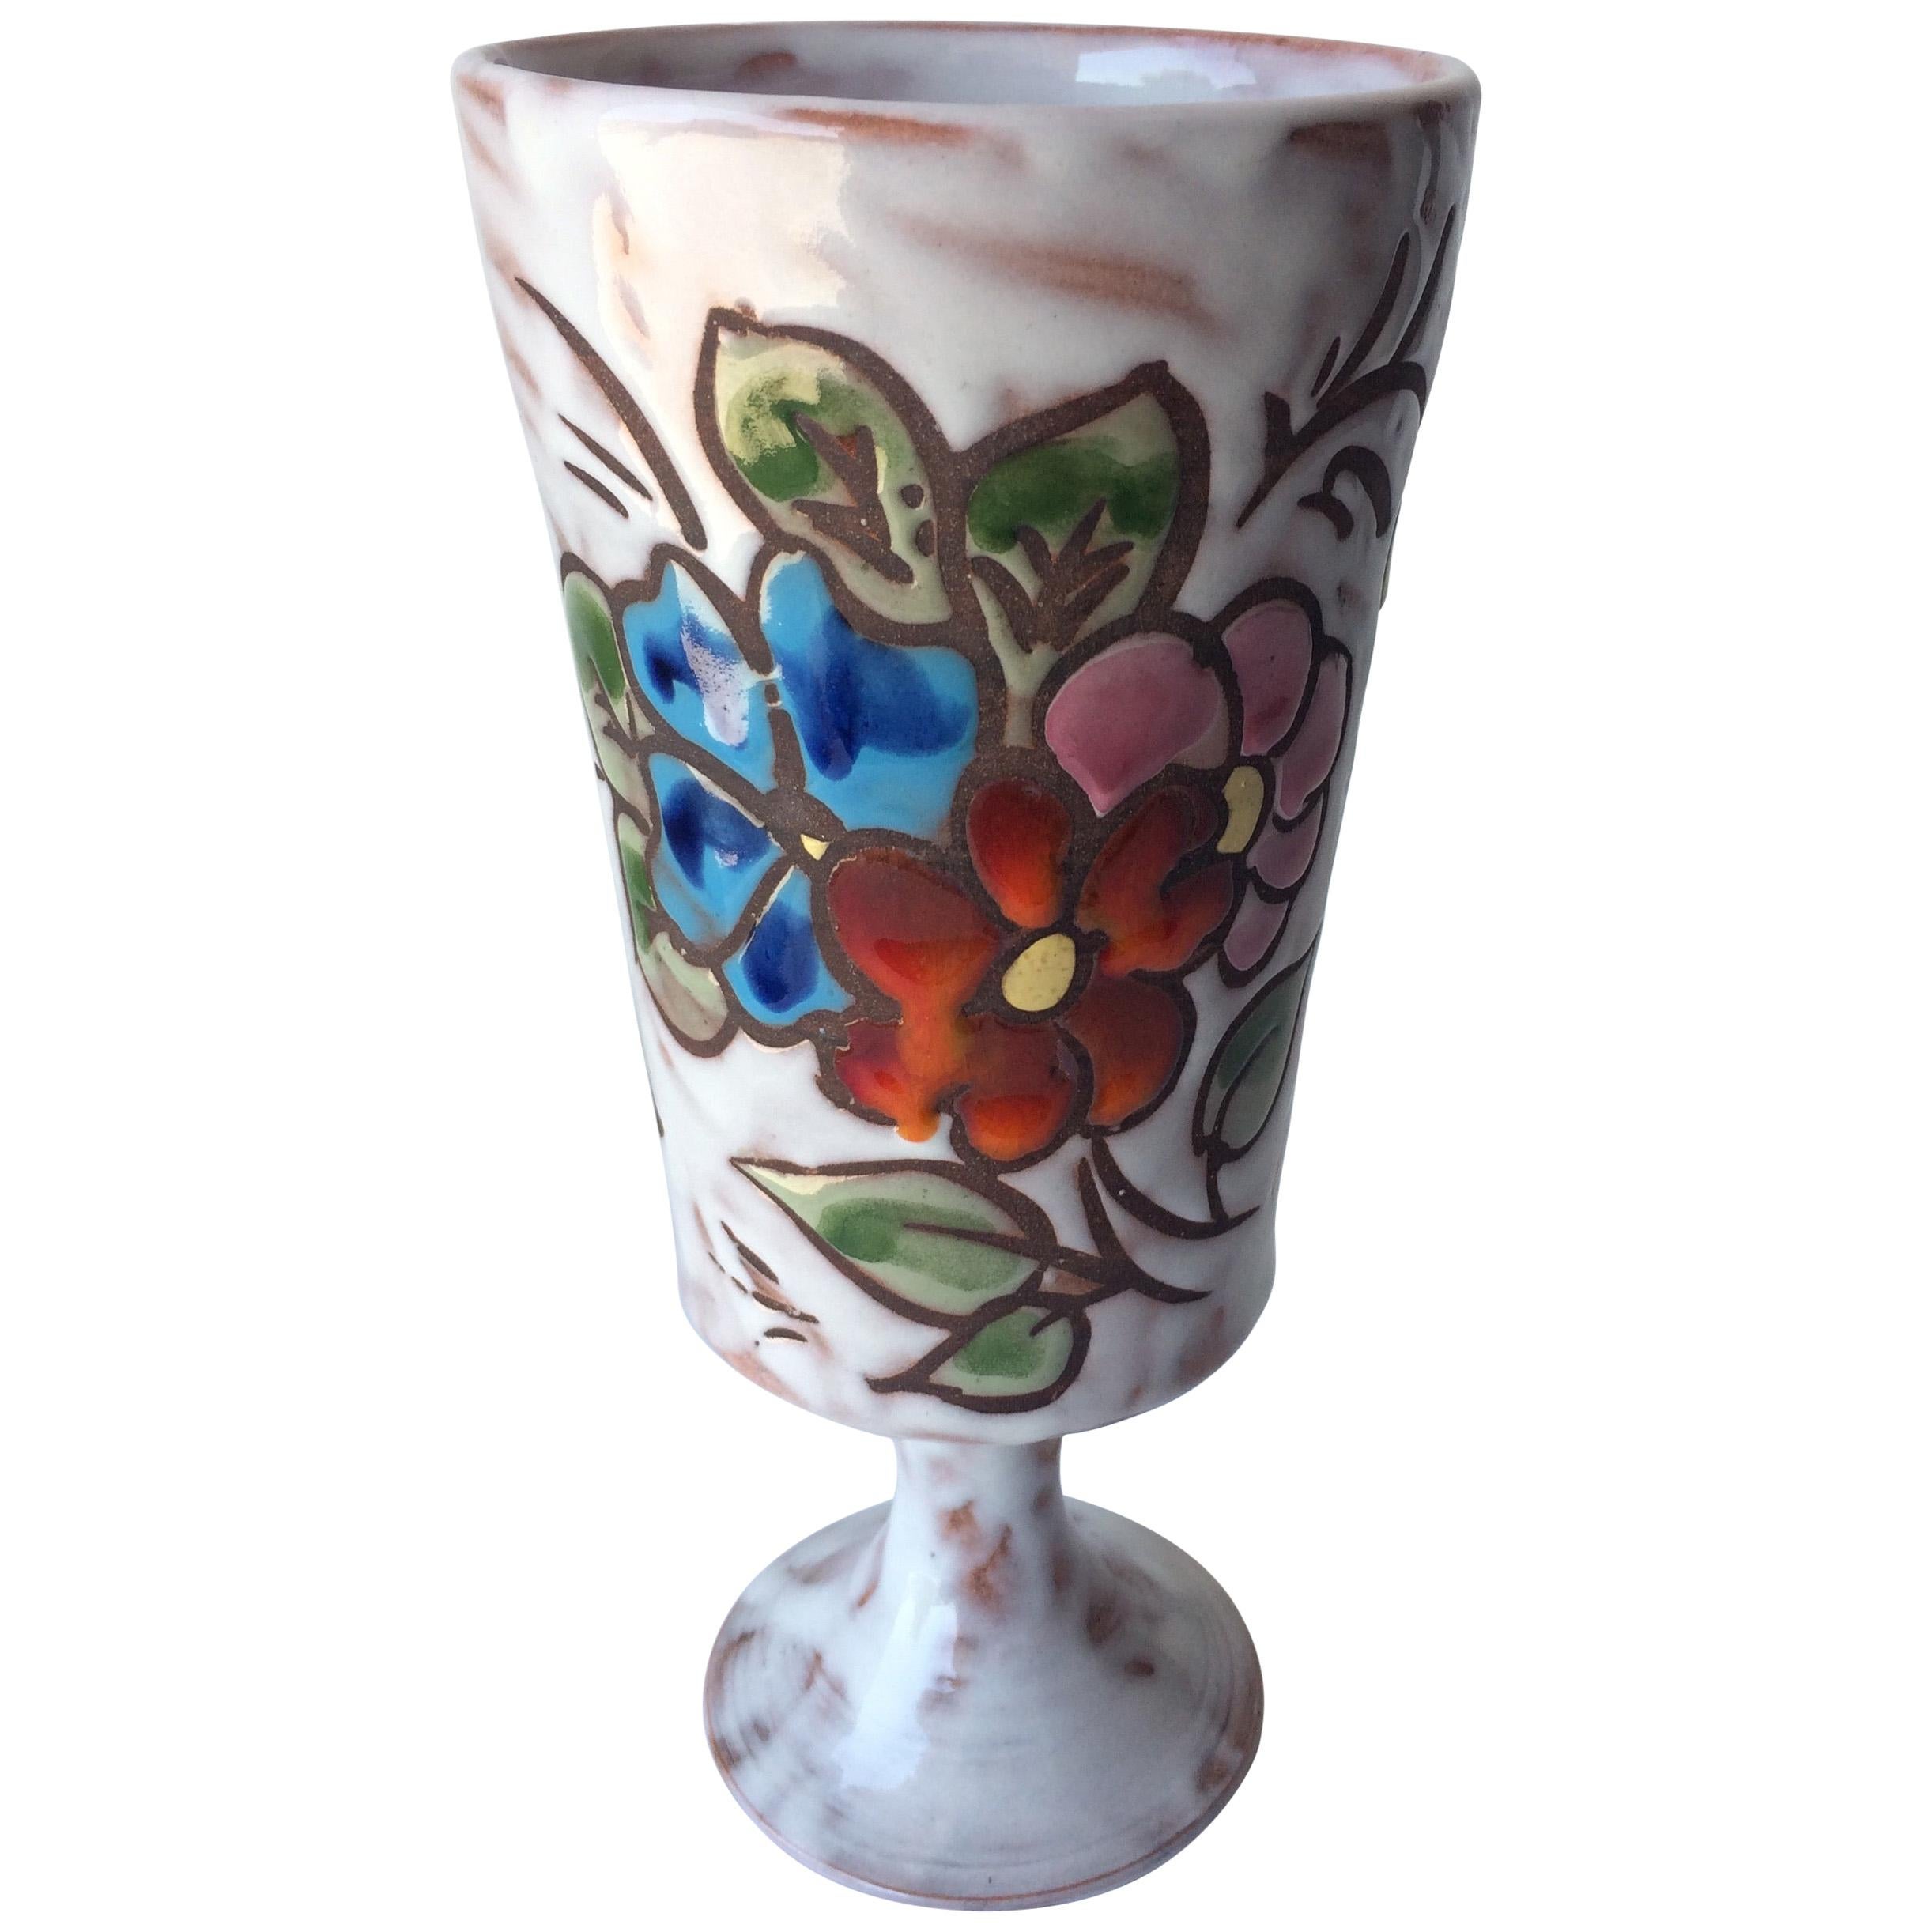 Midcentury Floral Designed Ceramic Vase Signed Miclay